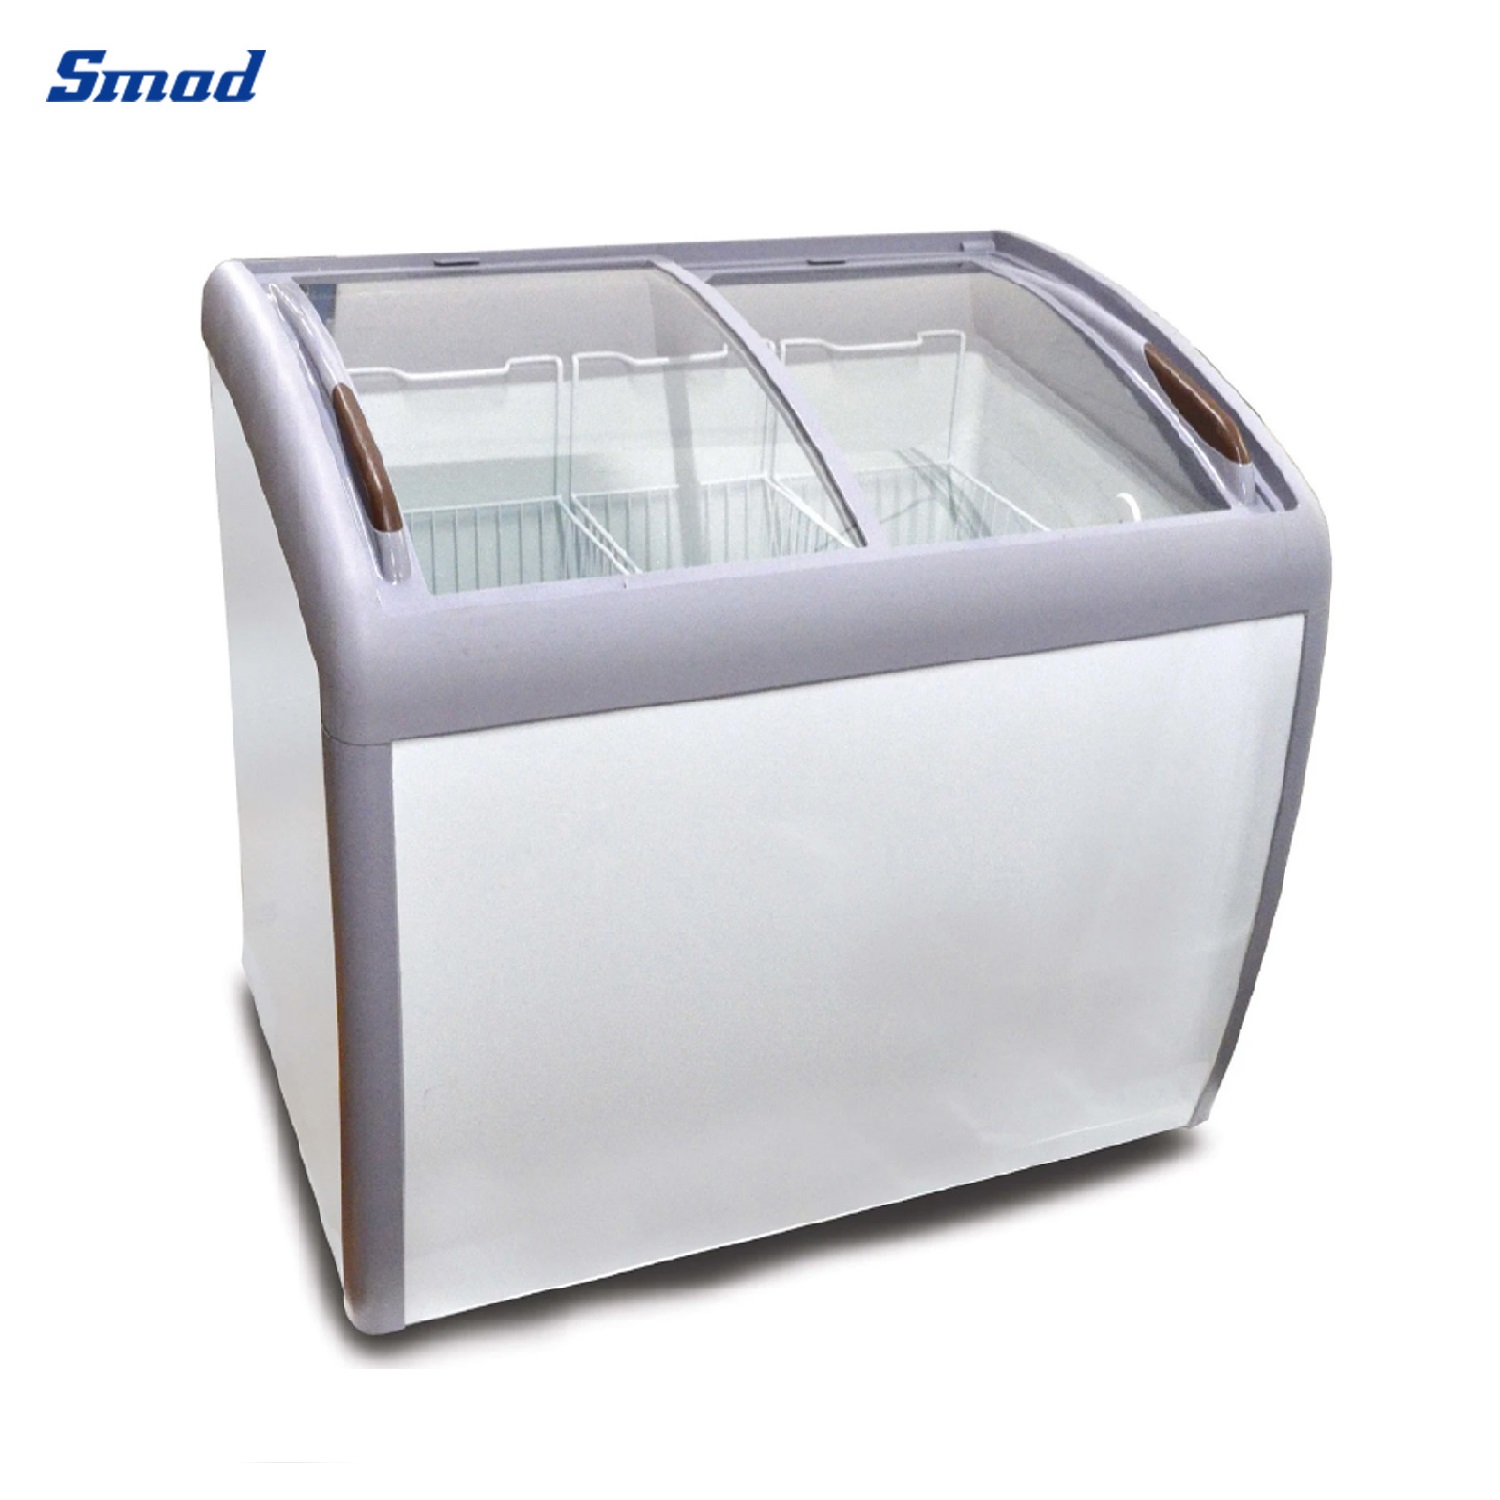 
Smad Glass Top Ice Cream Deep Freezer with Environmentally friendly refrigerant